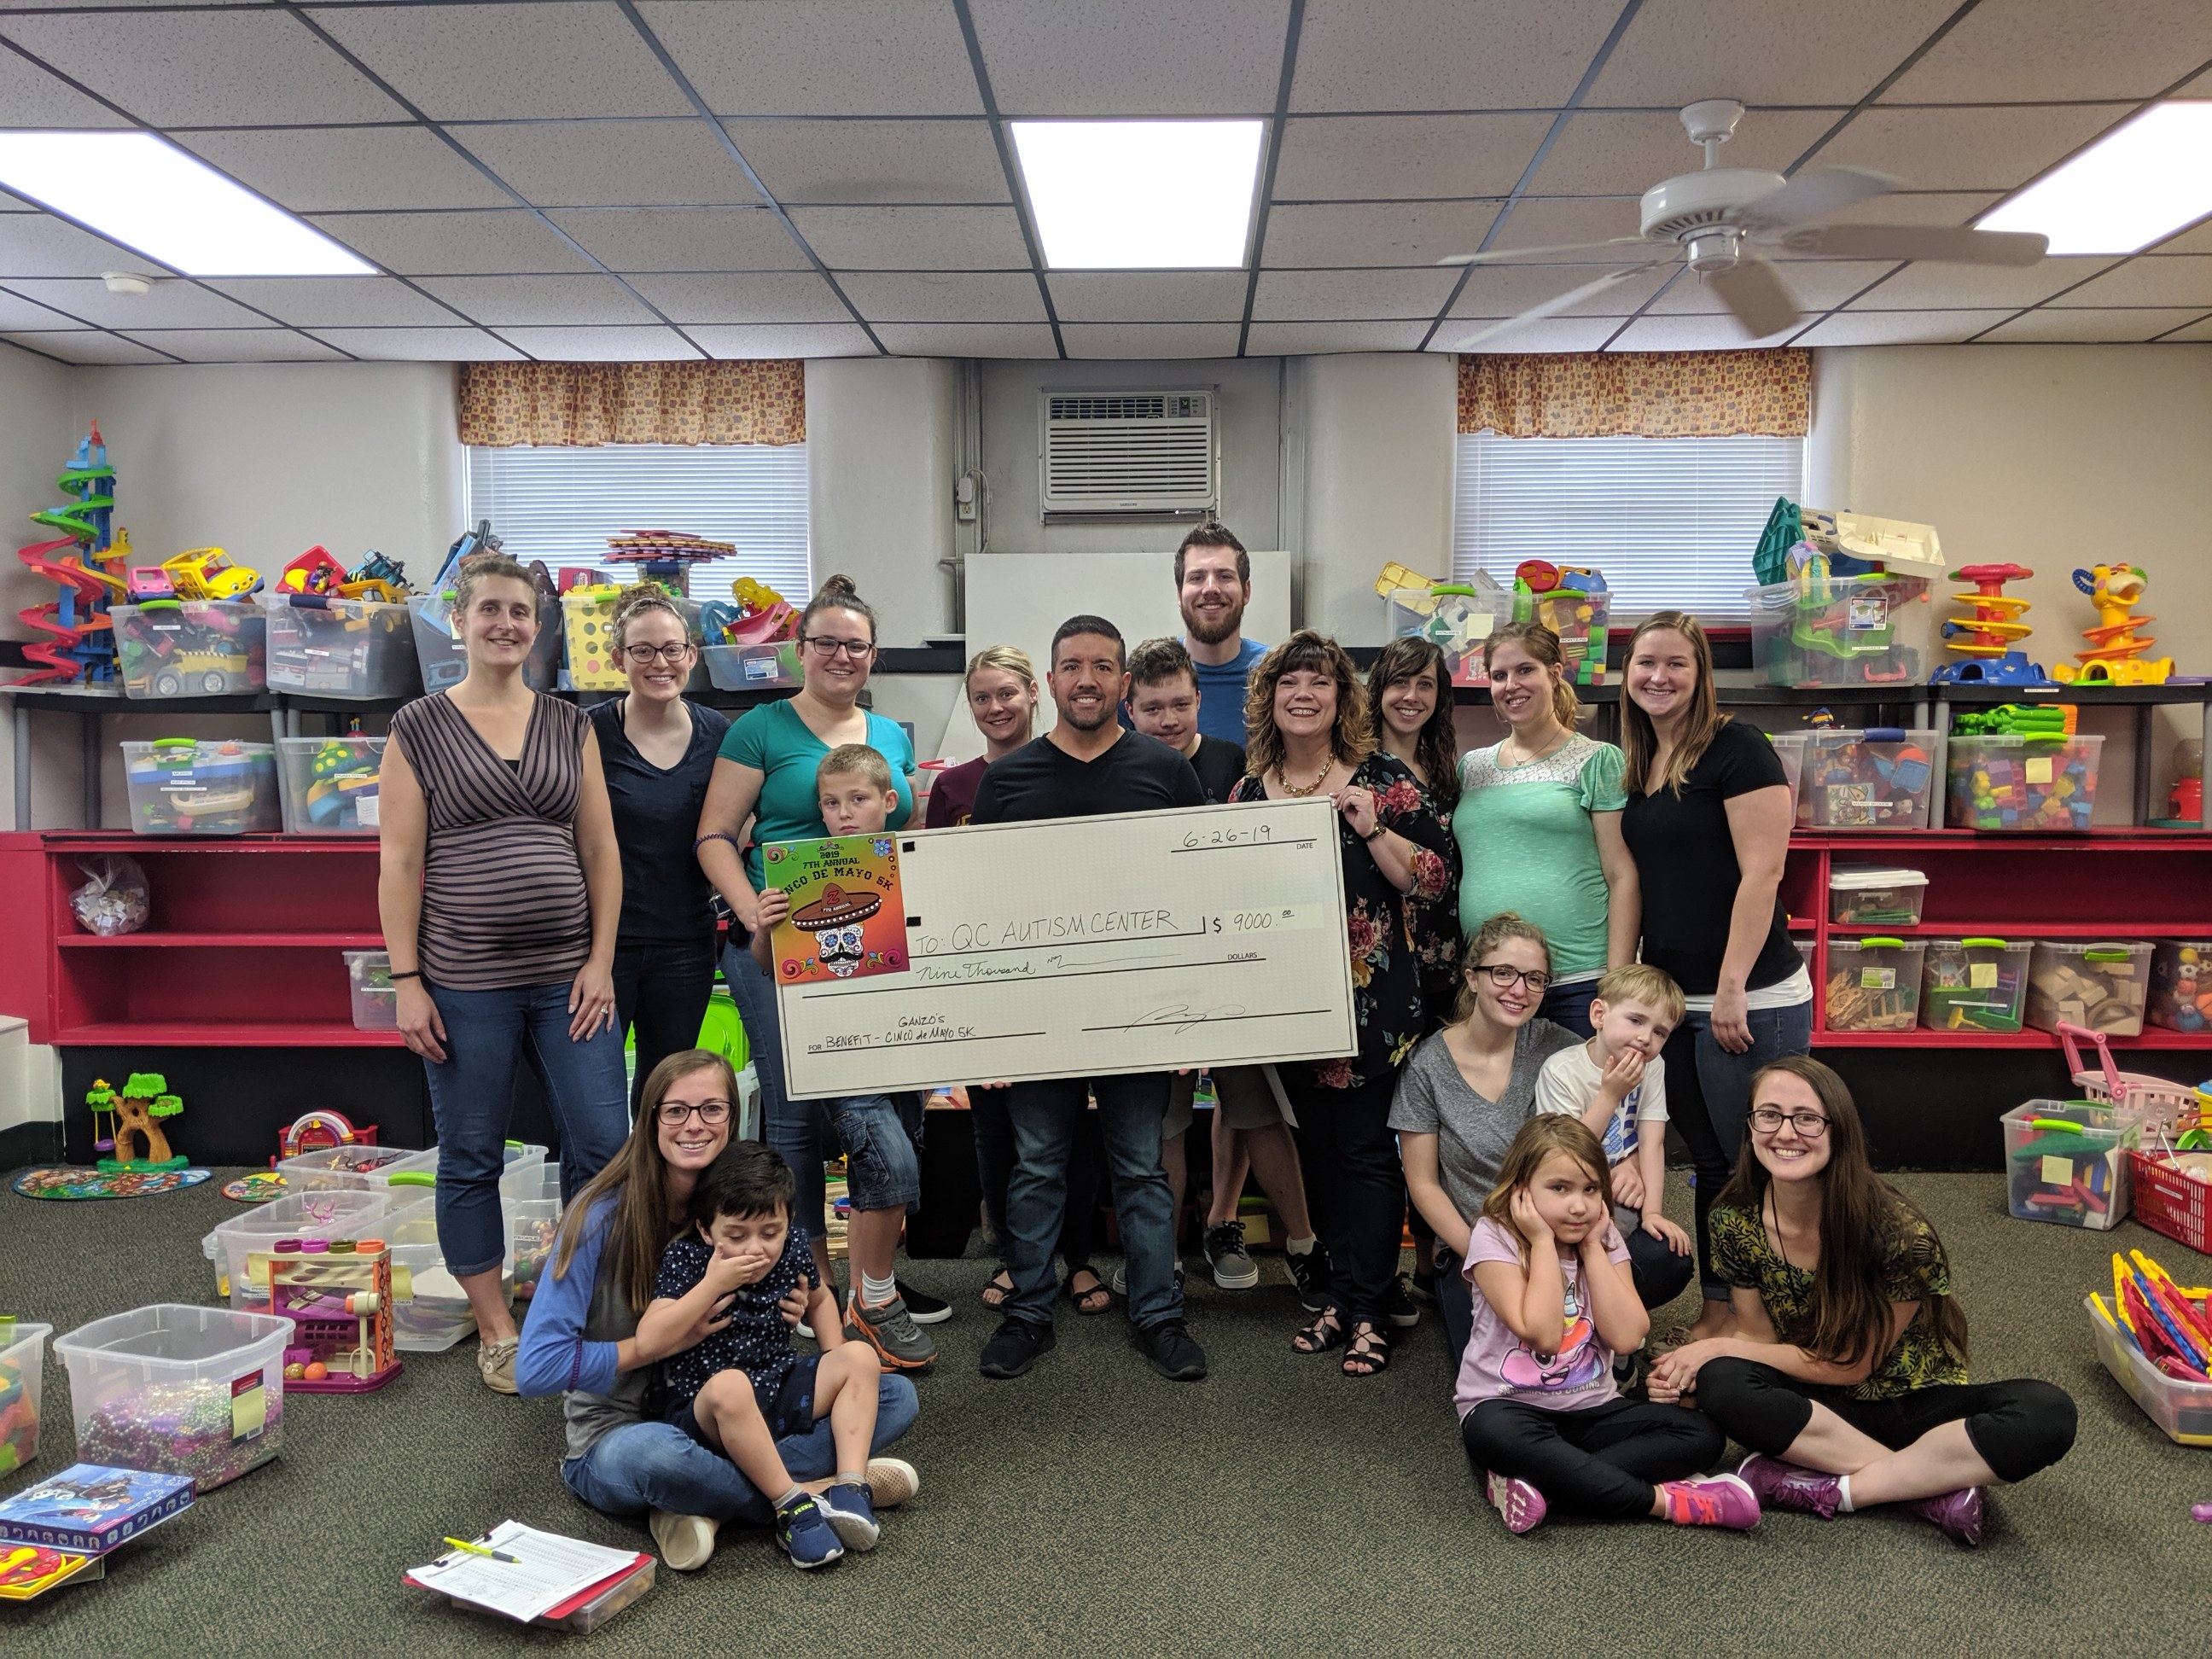 2019 Cinco de Mayo 5K donation of $9,000.00 to the Quad Cities Autism Center